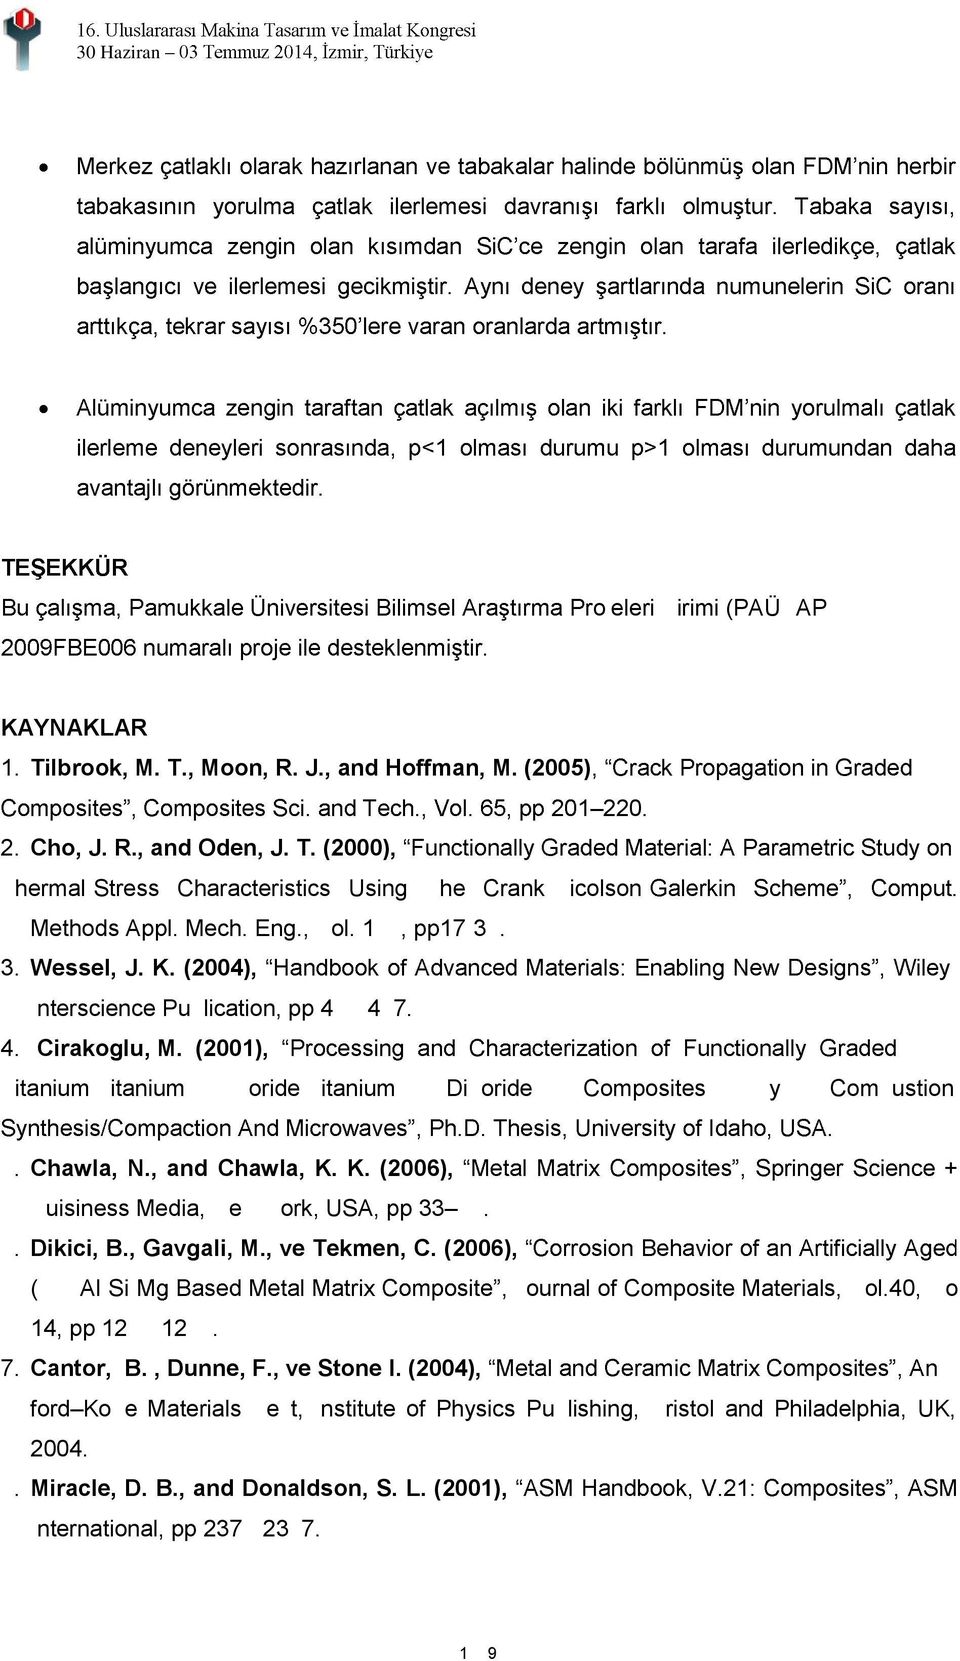 , and Chawla, K. K. (2006), Buisiness Media, New York, USA, pp 33 55. 6. Dikici, B., Gavgali, M., ve Tekmen, C. (2006), (T6)AlSi, Journal of Composite Materials, Vol.40, No 14, pp 12591269. 7.